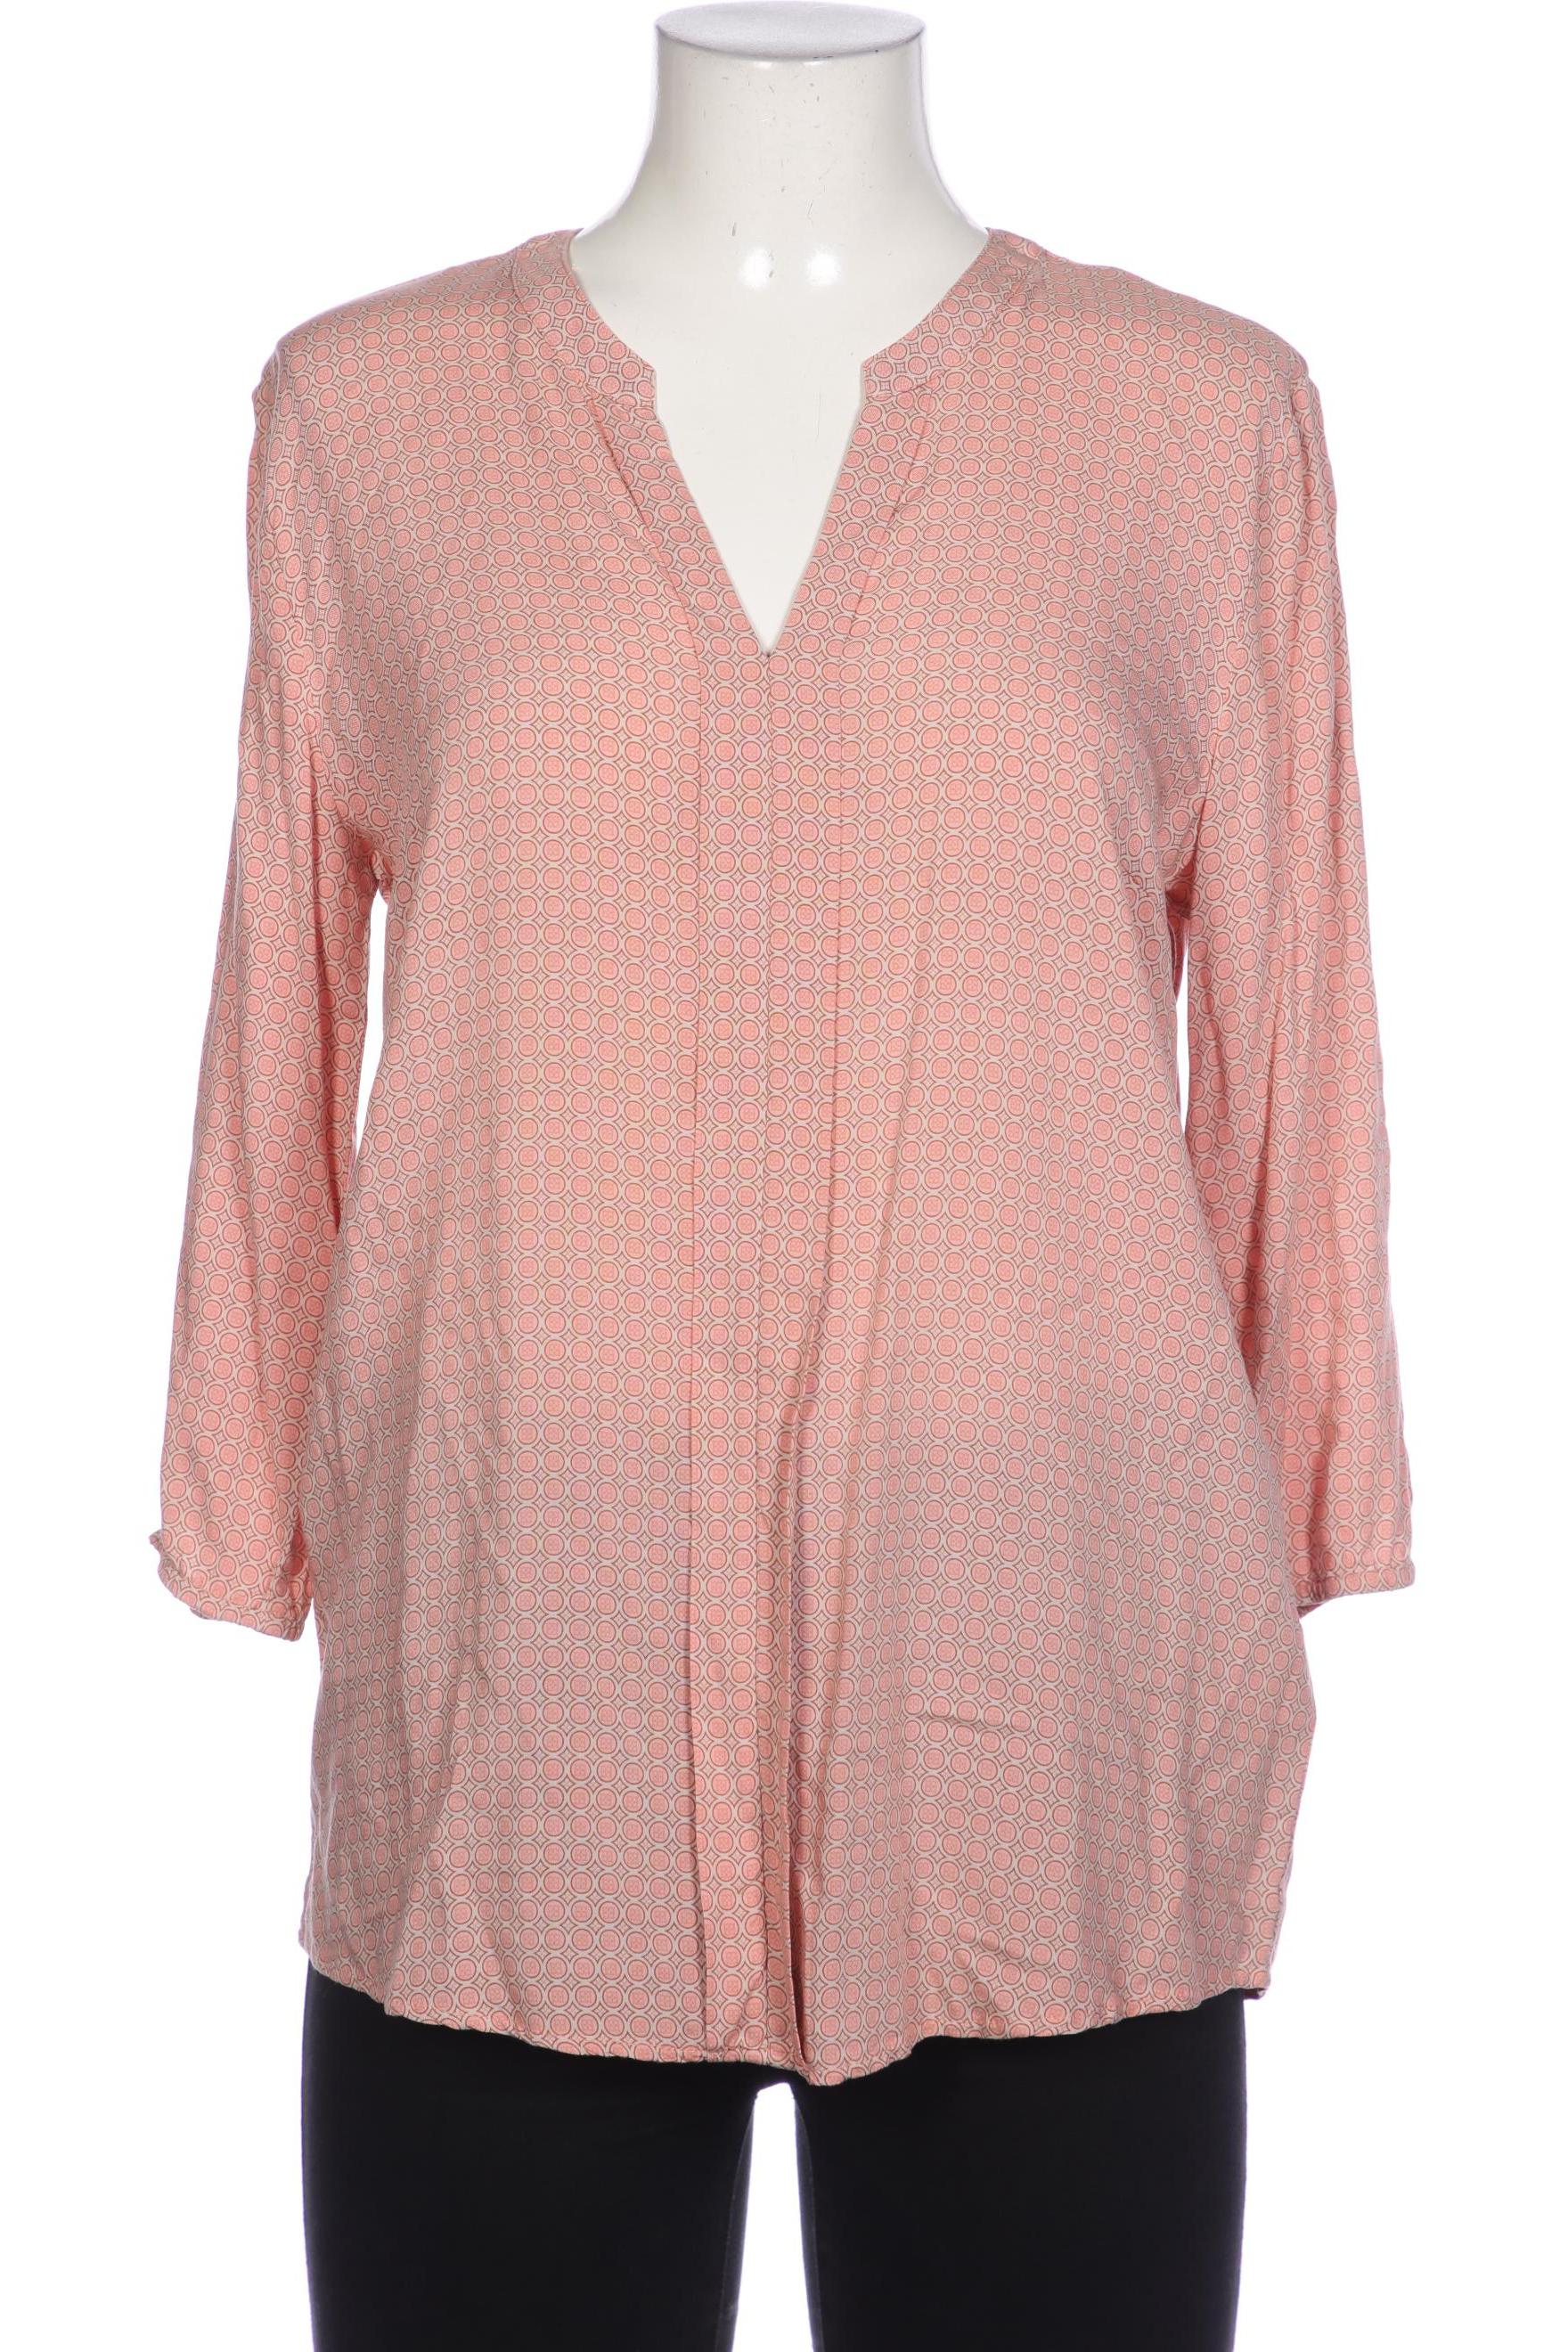 Betty Barclay Damen Bluse, pink, Gr. 40 von Betty Barclay